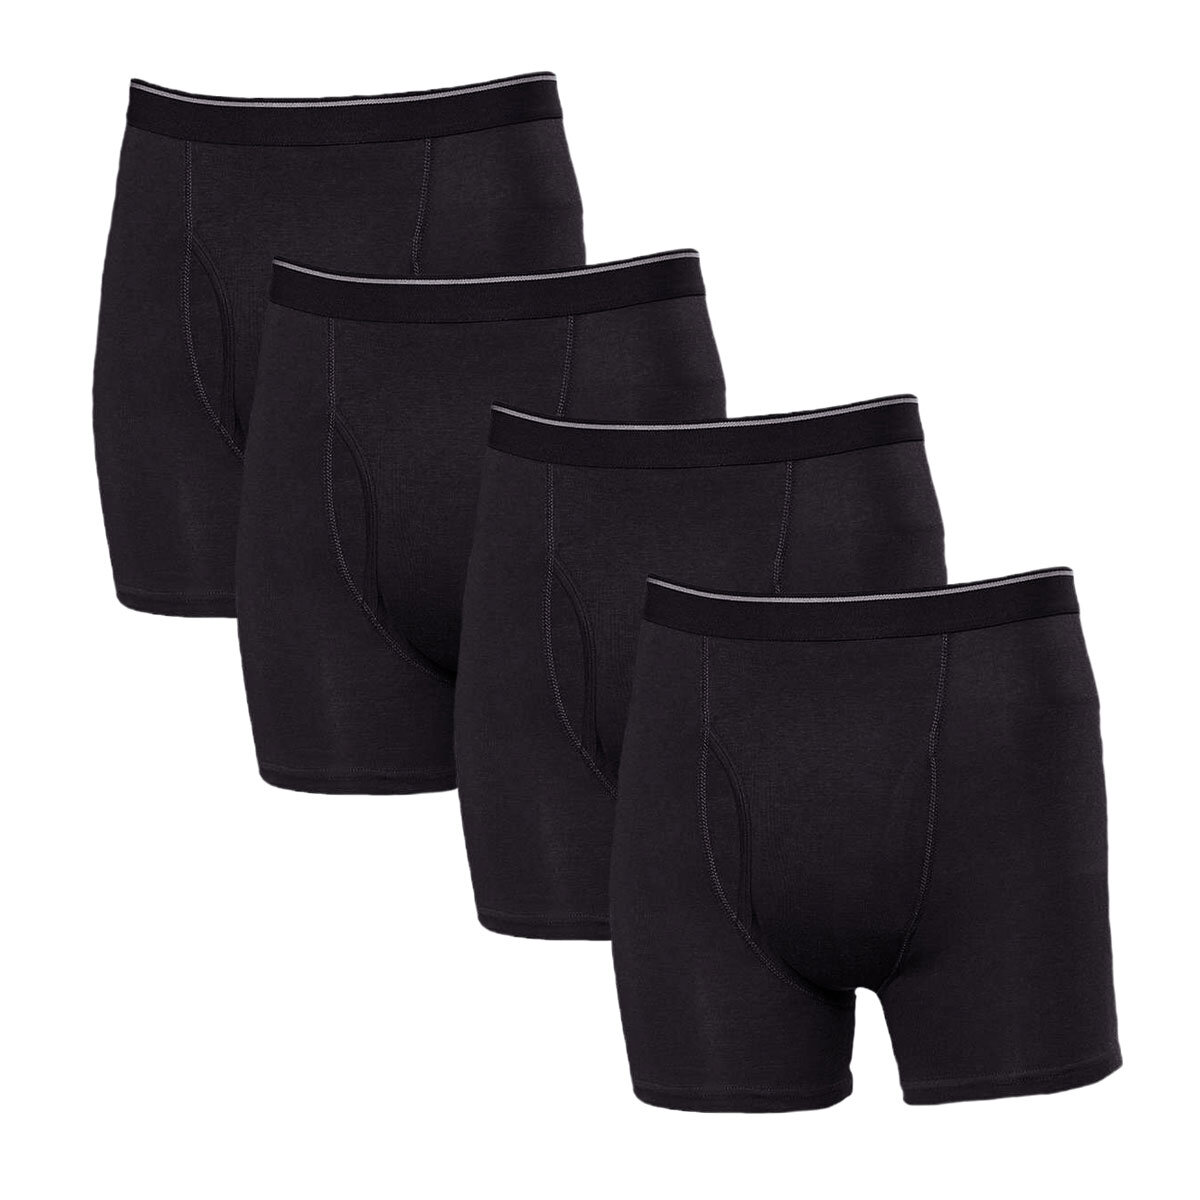 Kirkland Signature Men's 4 Pack Boxer Shorts, Extra Large